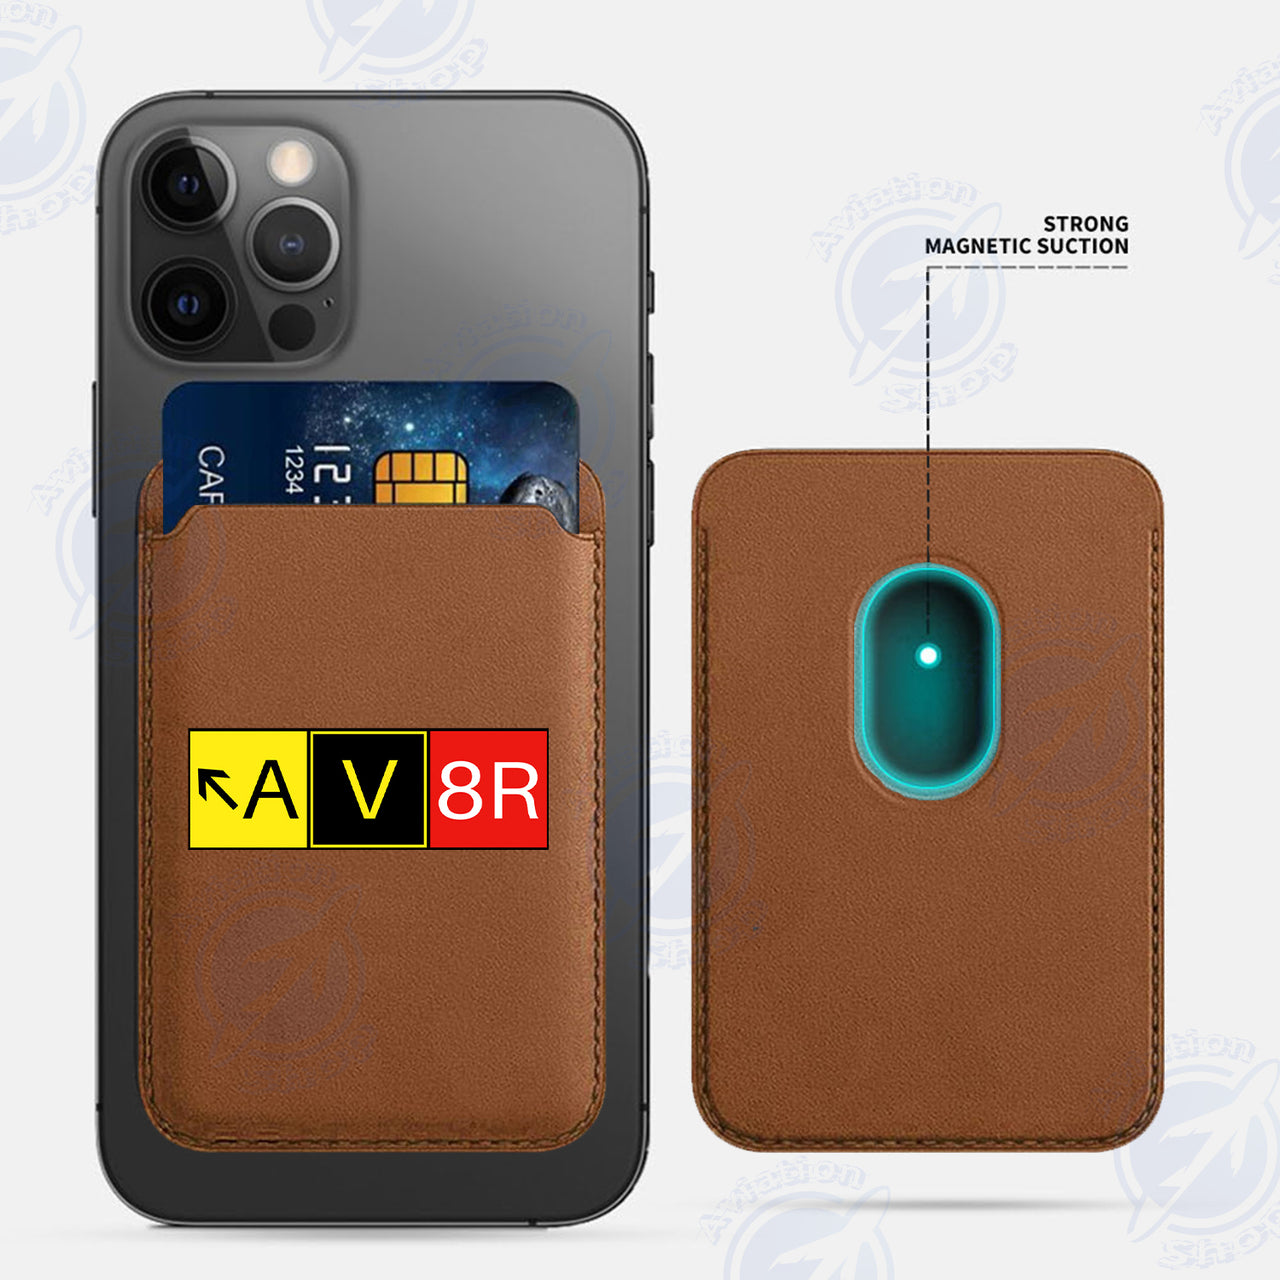 AV8R iPhone Cases Magnetic Card Wallet